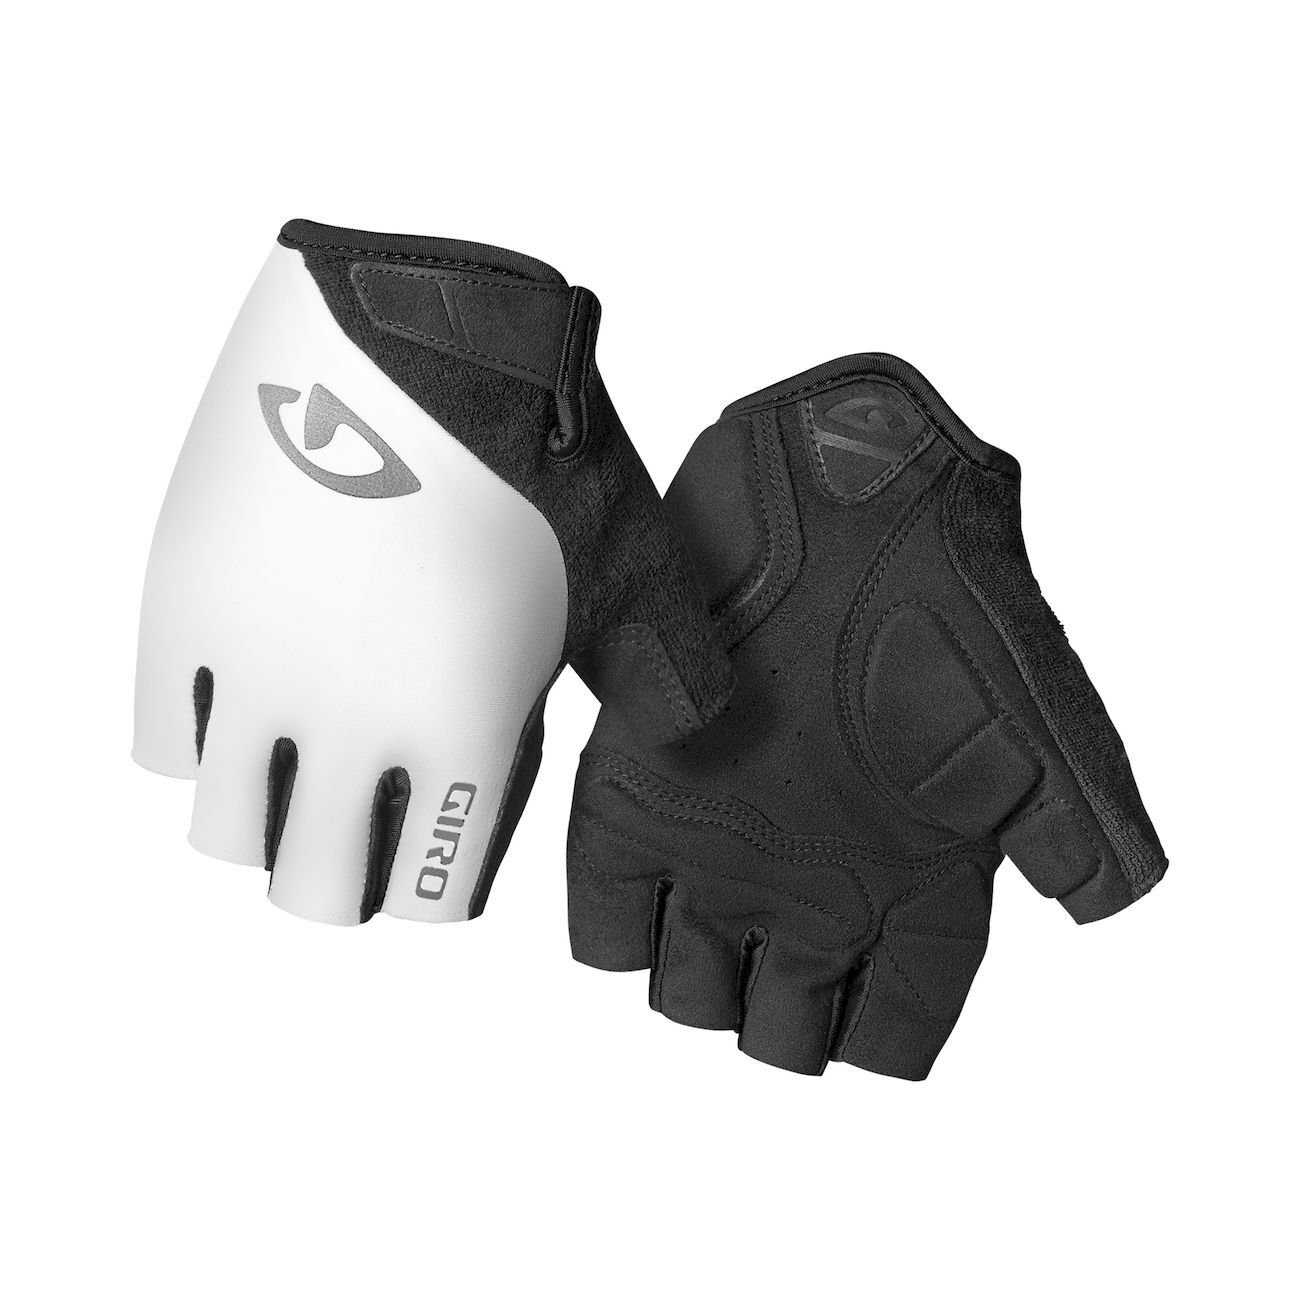 Giro Jag'Ette - Cycling gloves - Women's